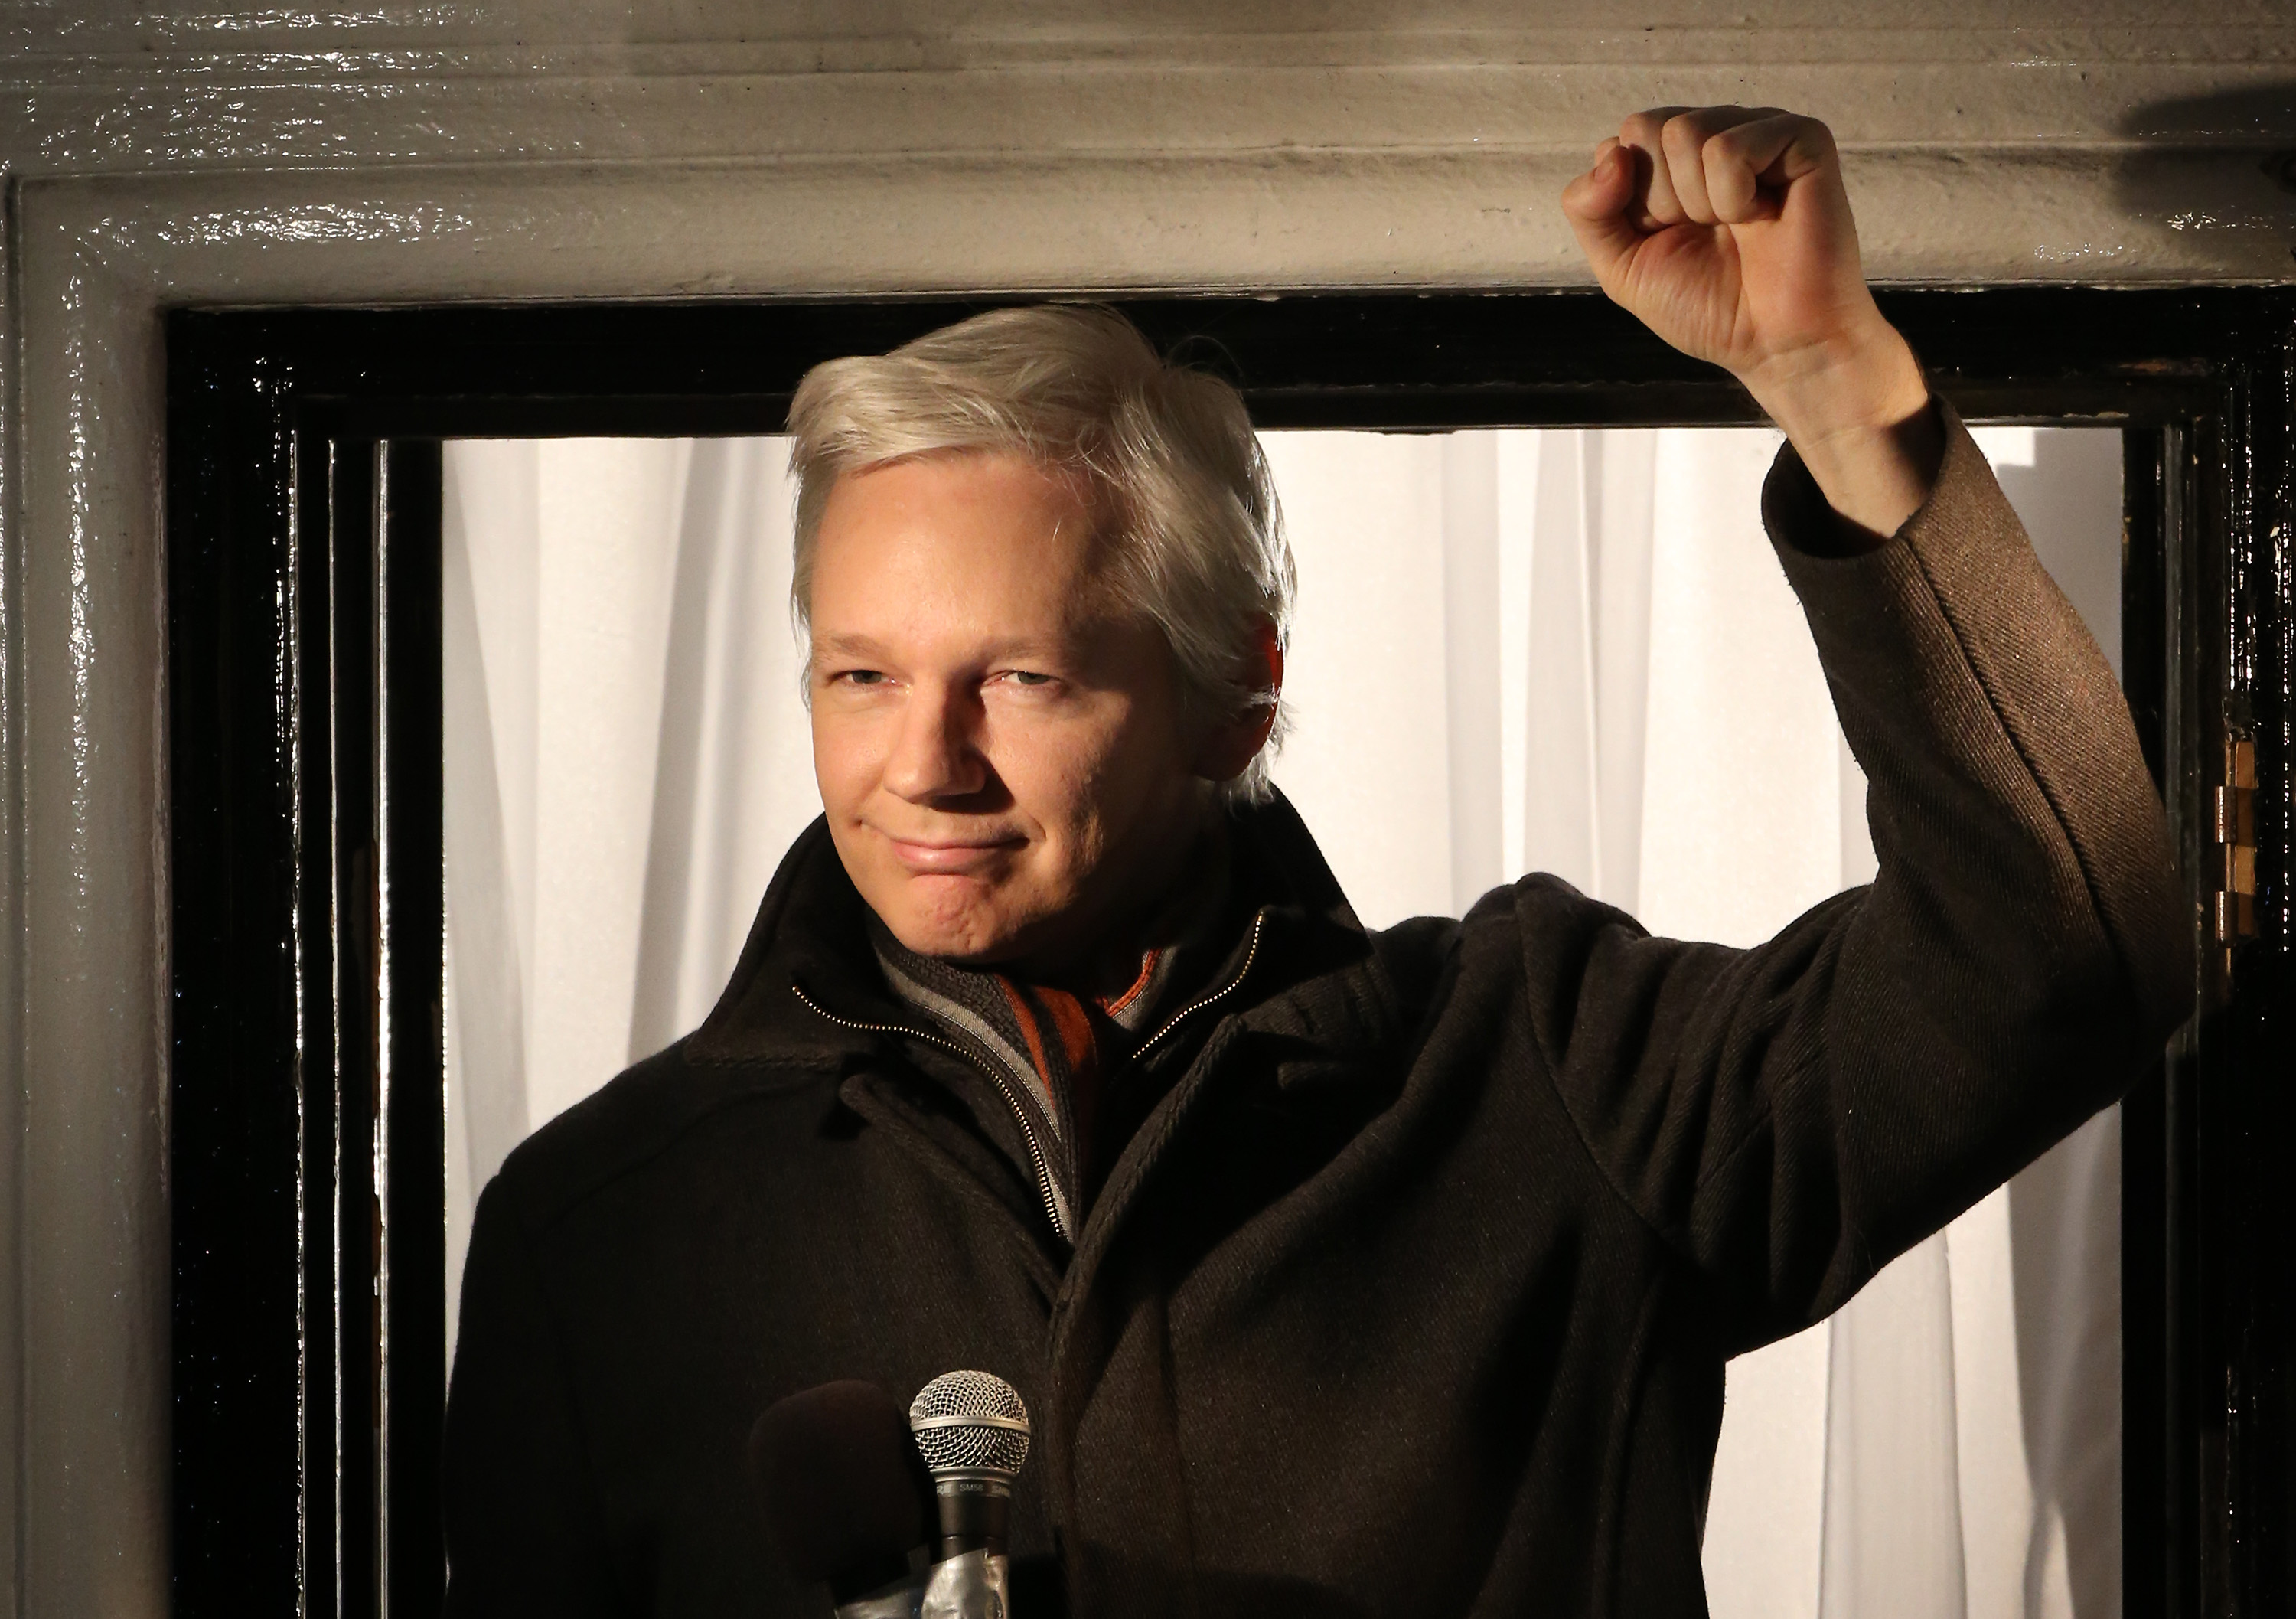 Wikileaks founder Julian Assange speaks from the Ecuadorian Embassy on December 20, 2012 in London, England. (Peter Macdiarmid&mdash;Getty Images)